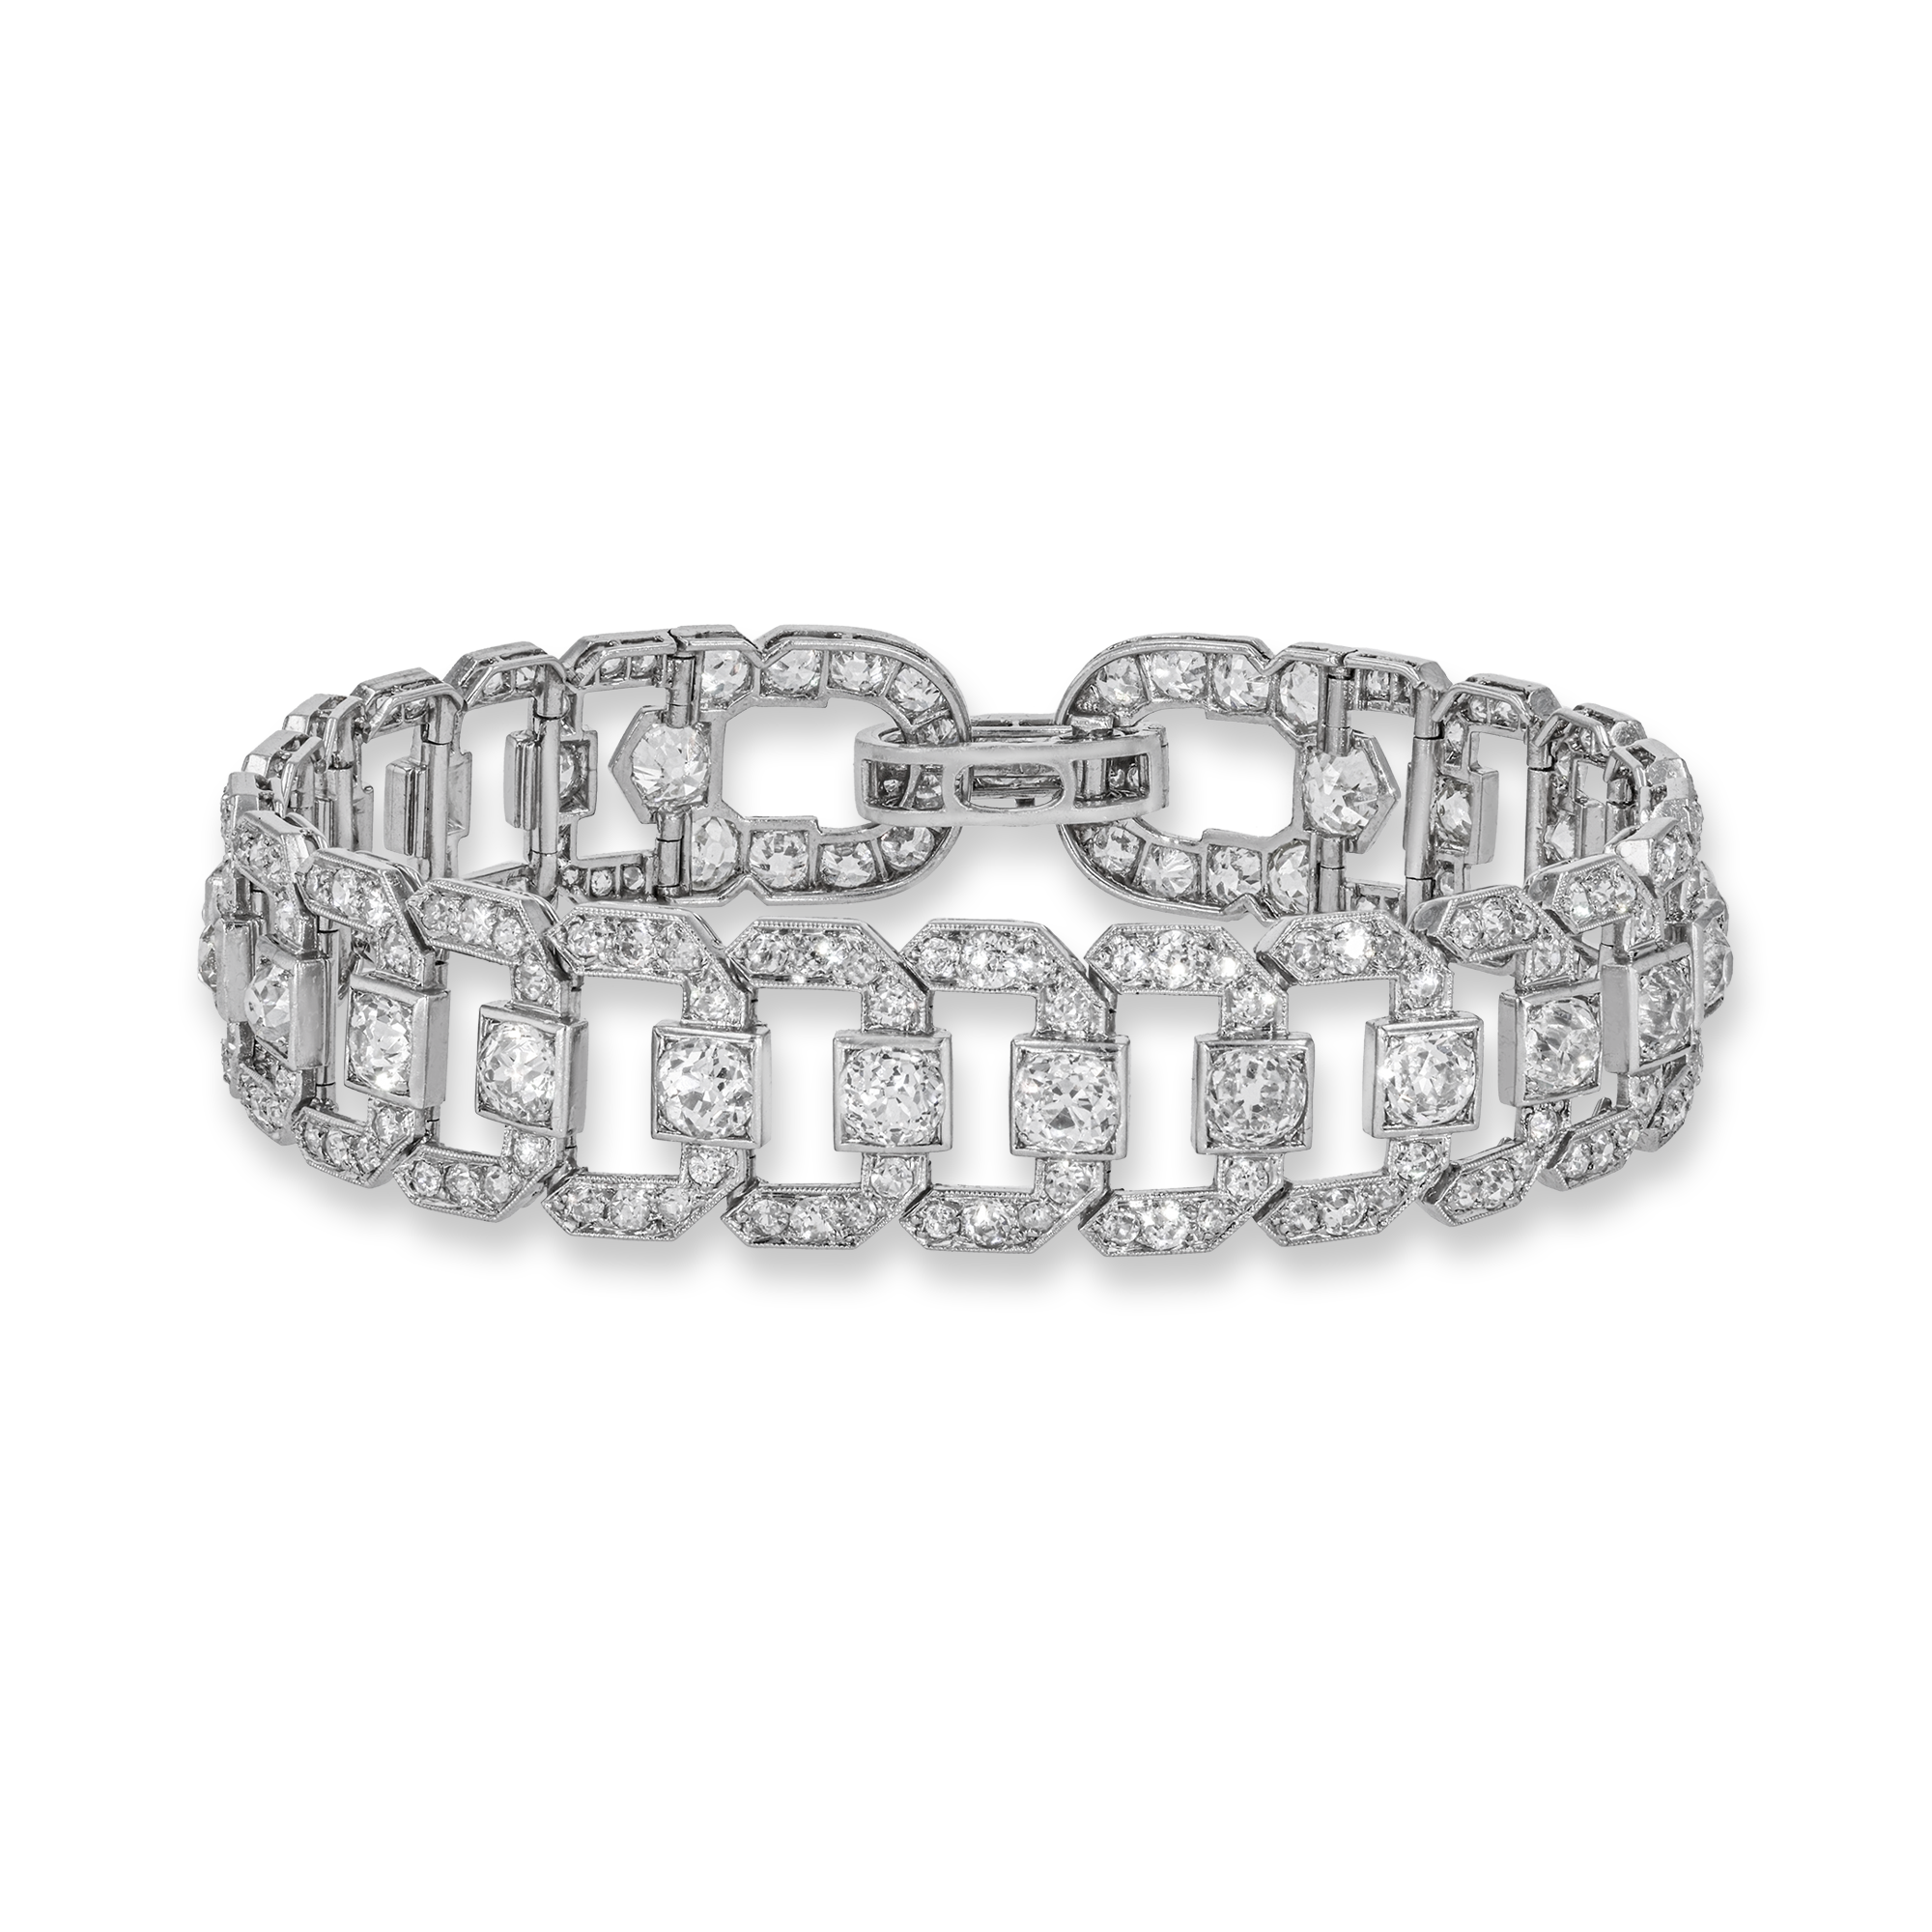 Cartier Art Deco Diamond Bracelet Old Cut, Millegrain Set_1